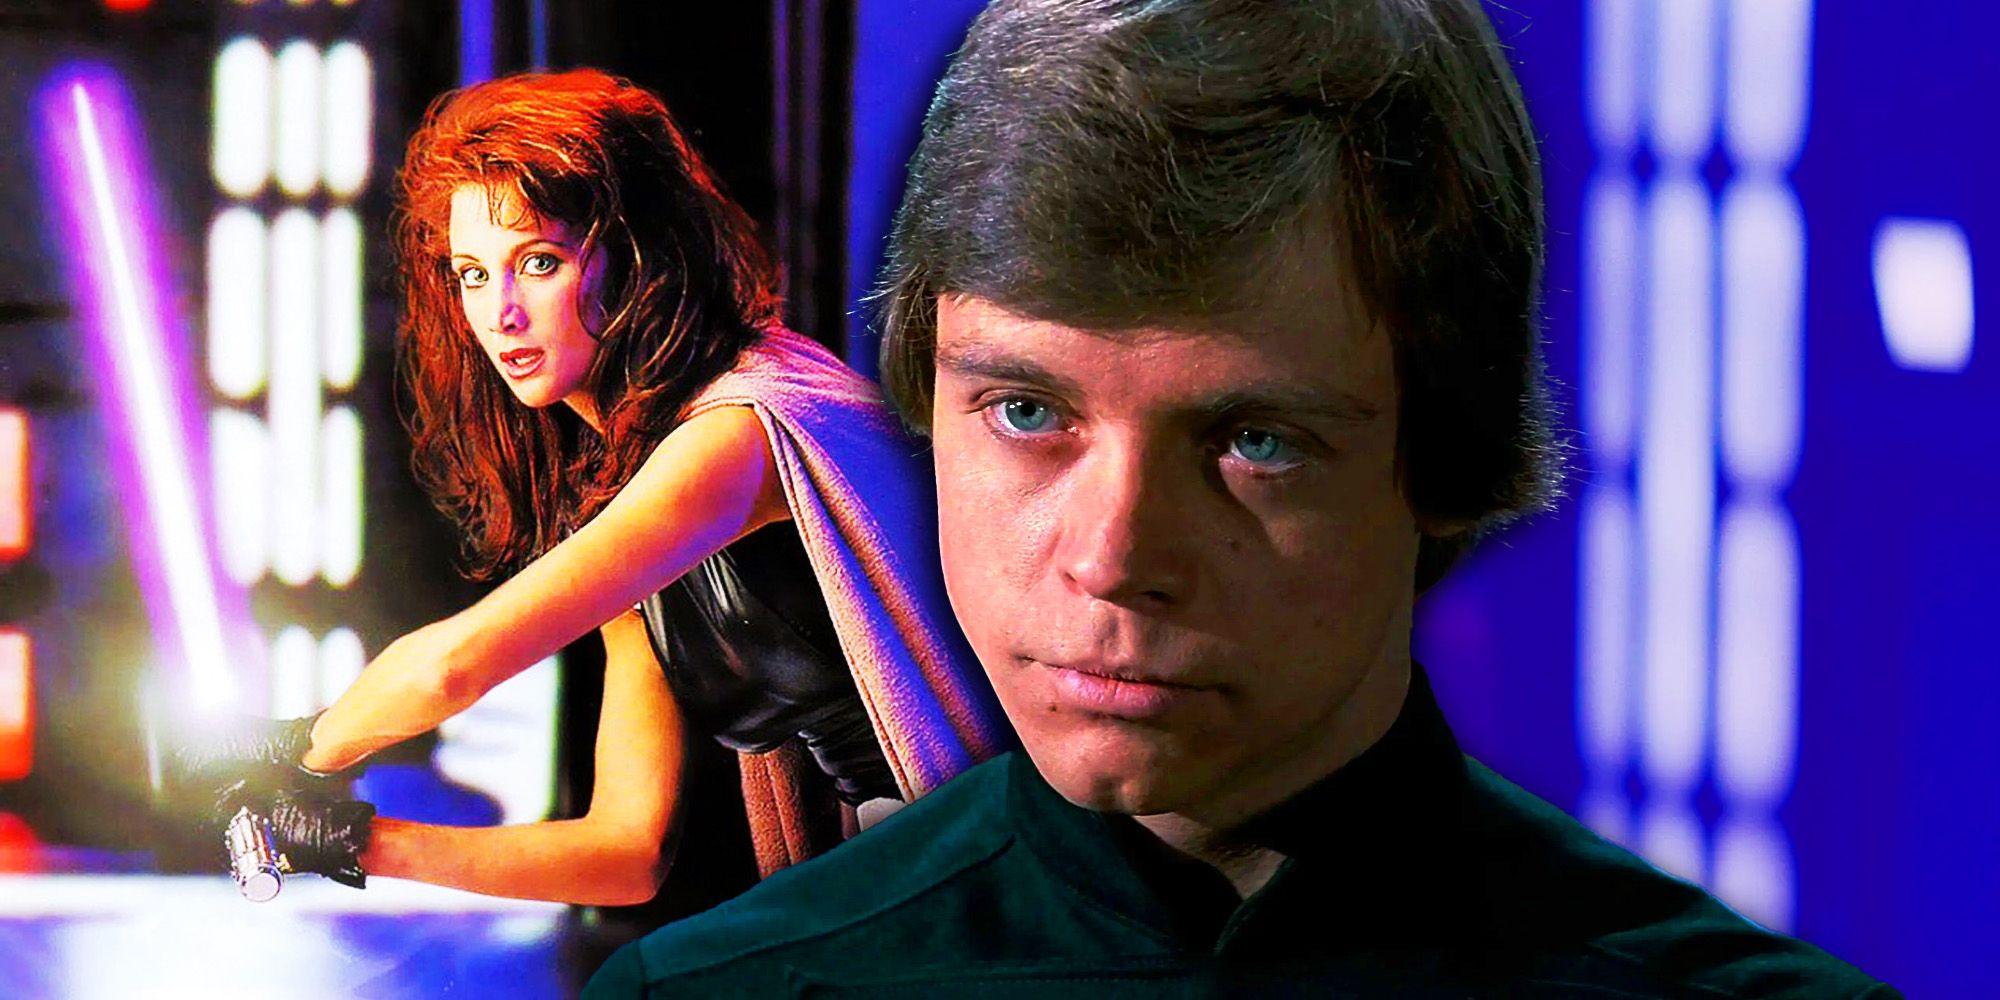 Mark Hamill's Luke Skywalker looks serious in Return of the Jedi, superimposed over Mara Jade in Star Wars